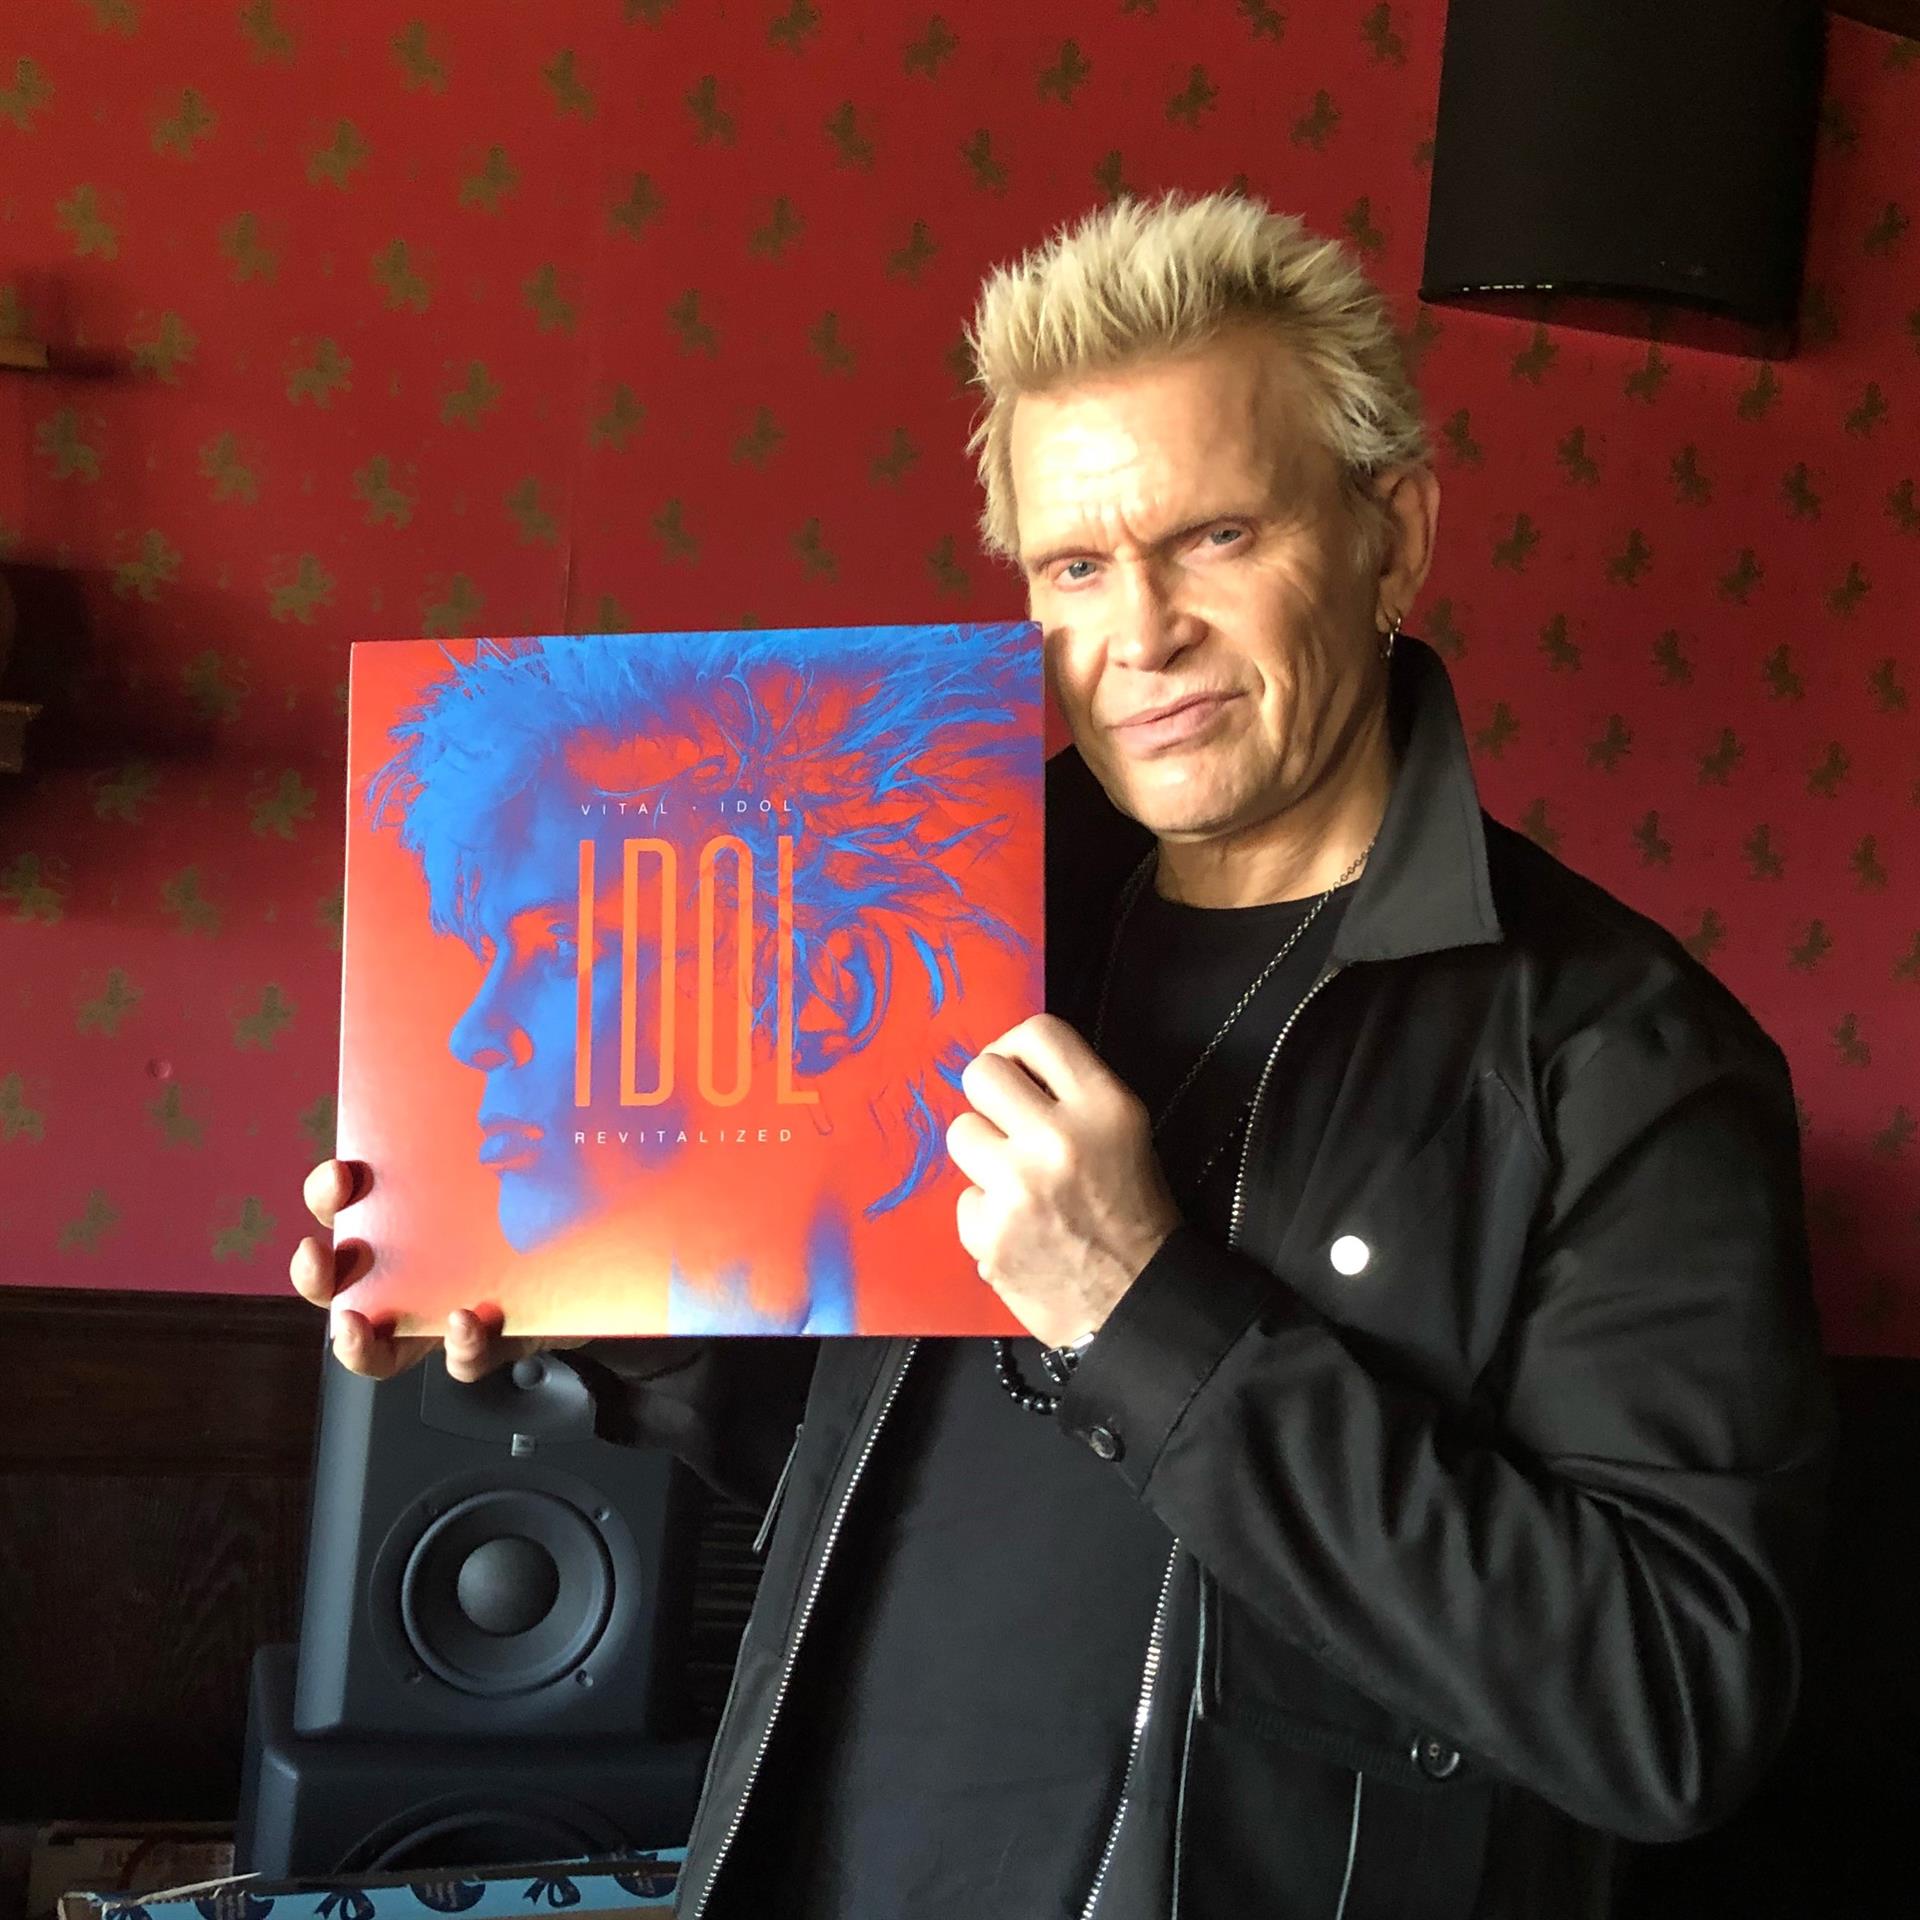 Billy Idol and Vinyl Release of Idol Revitalization